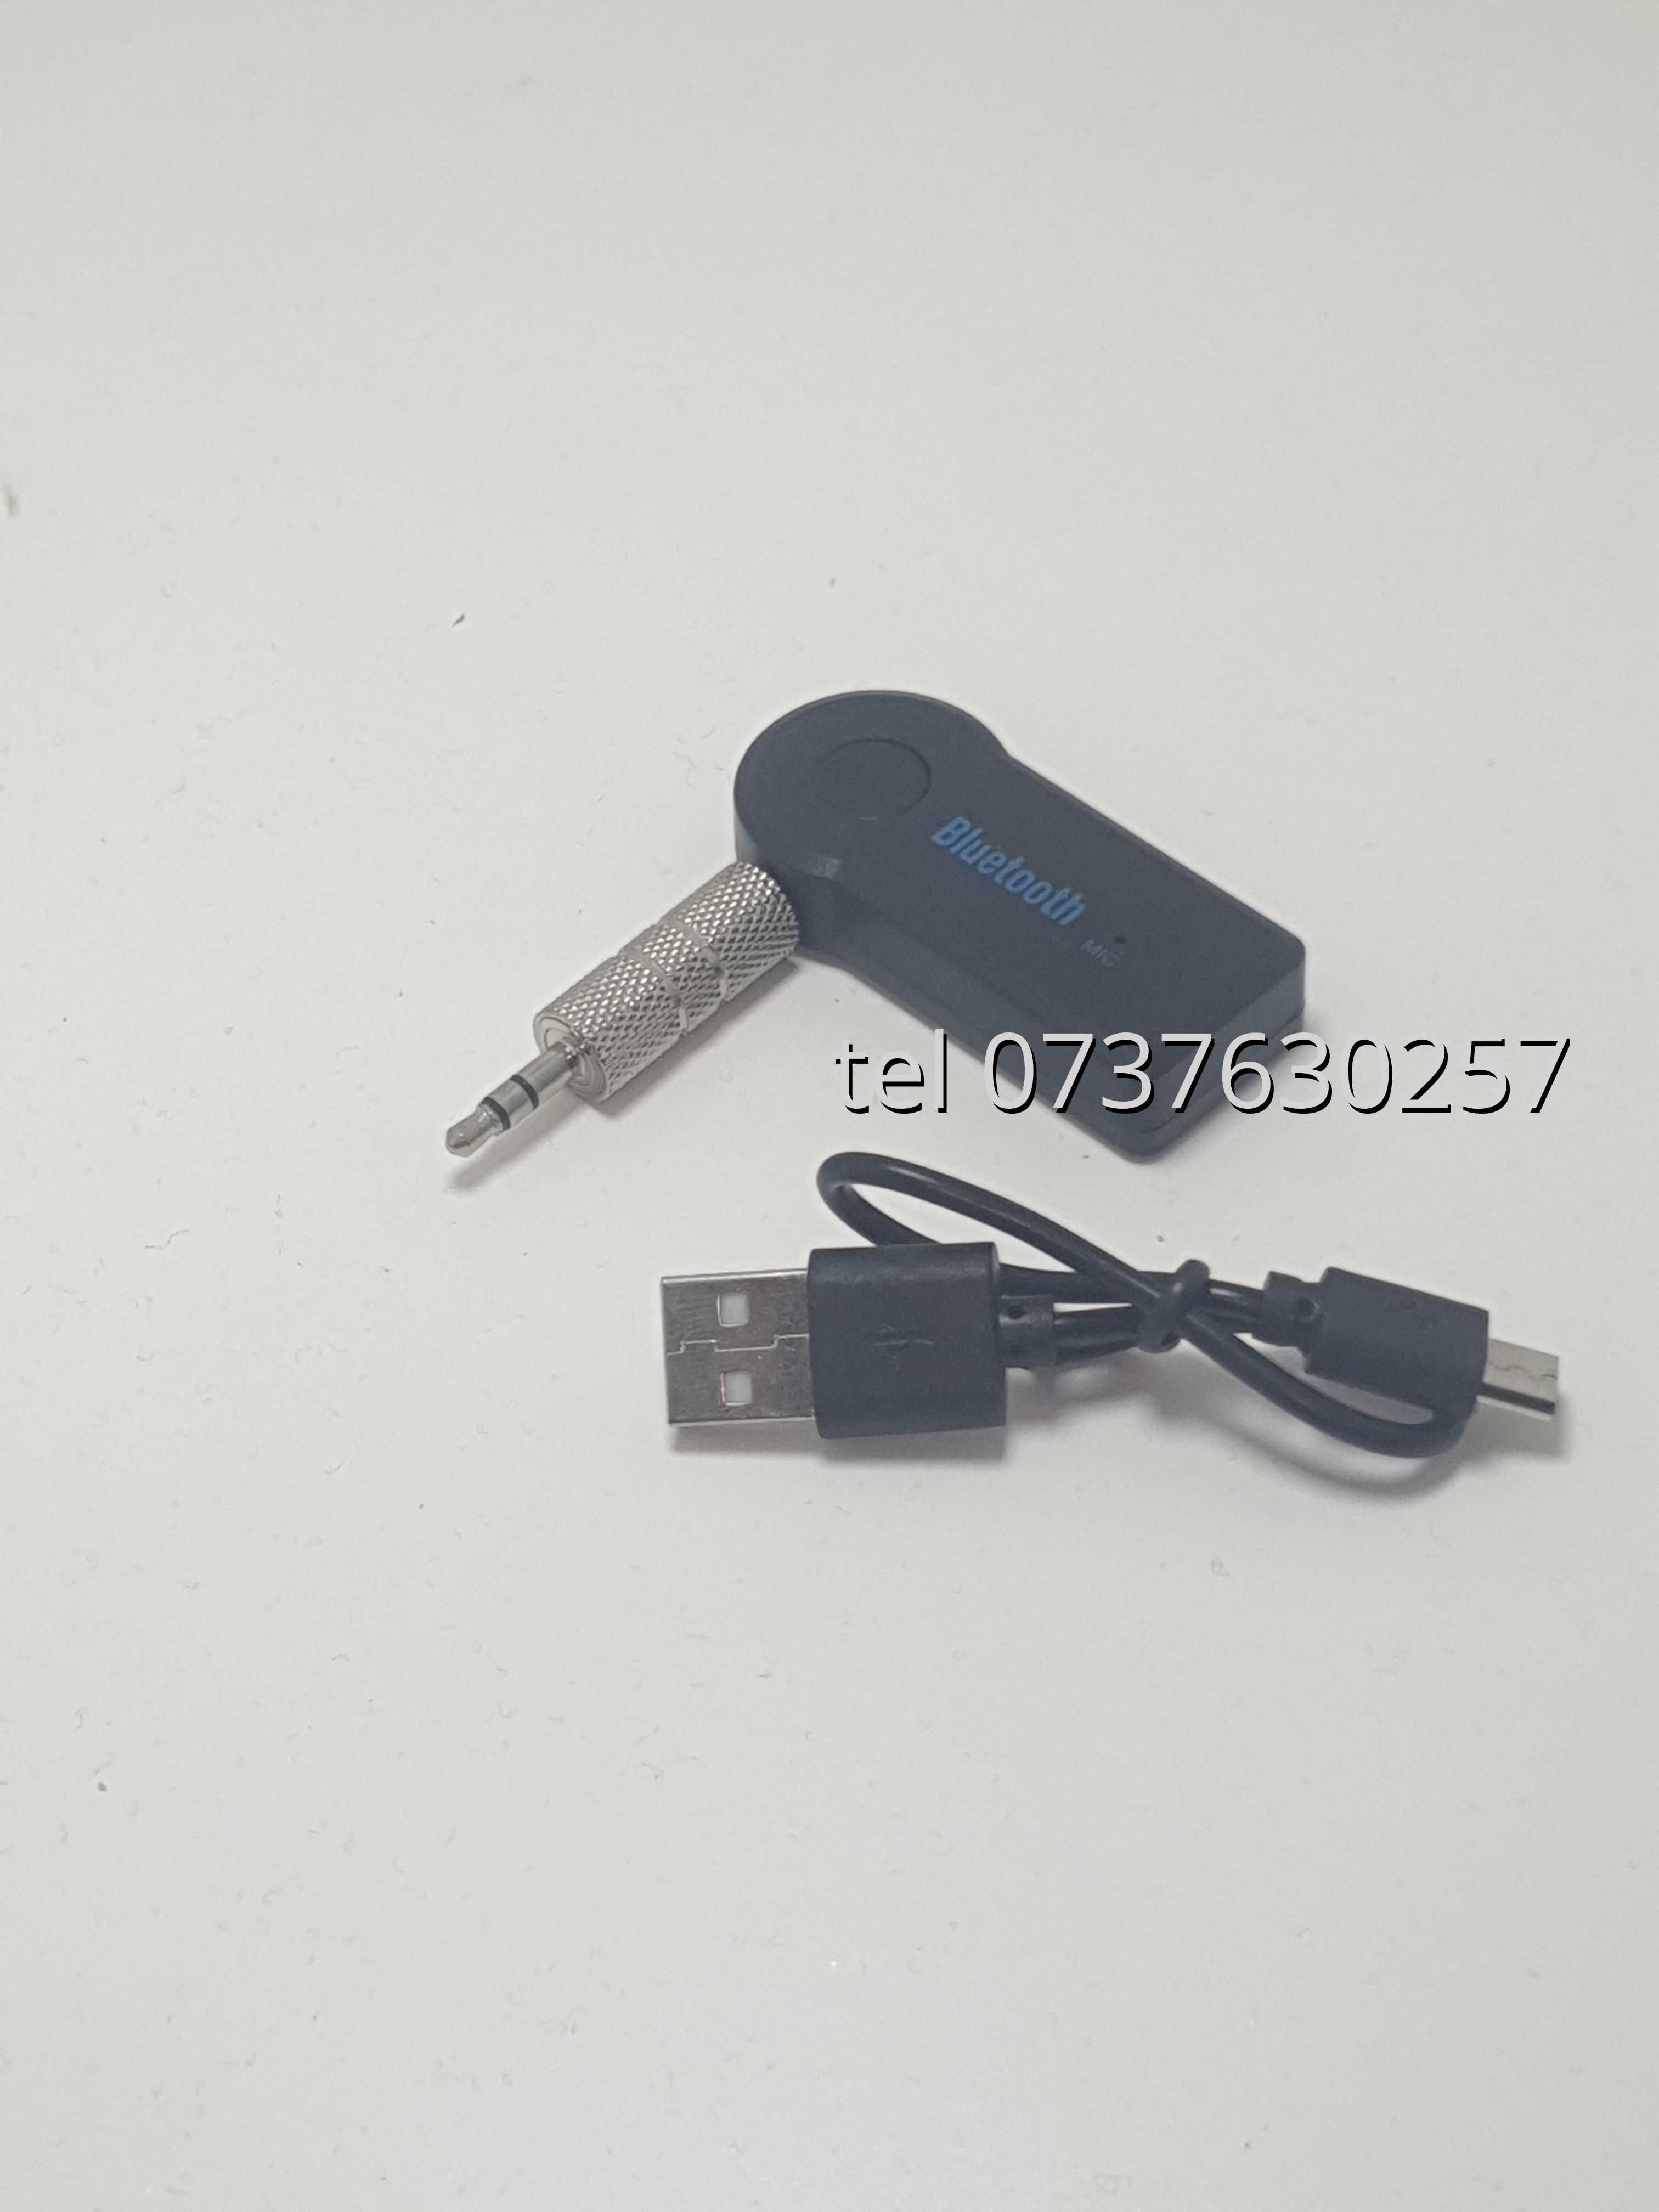 Oferta Adaptor  Audio Compatibil Bluetooth Special Masina Aux   Pentr